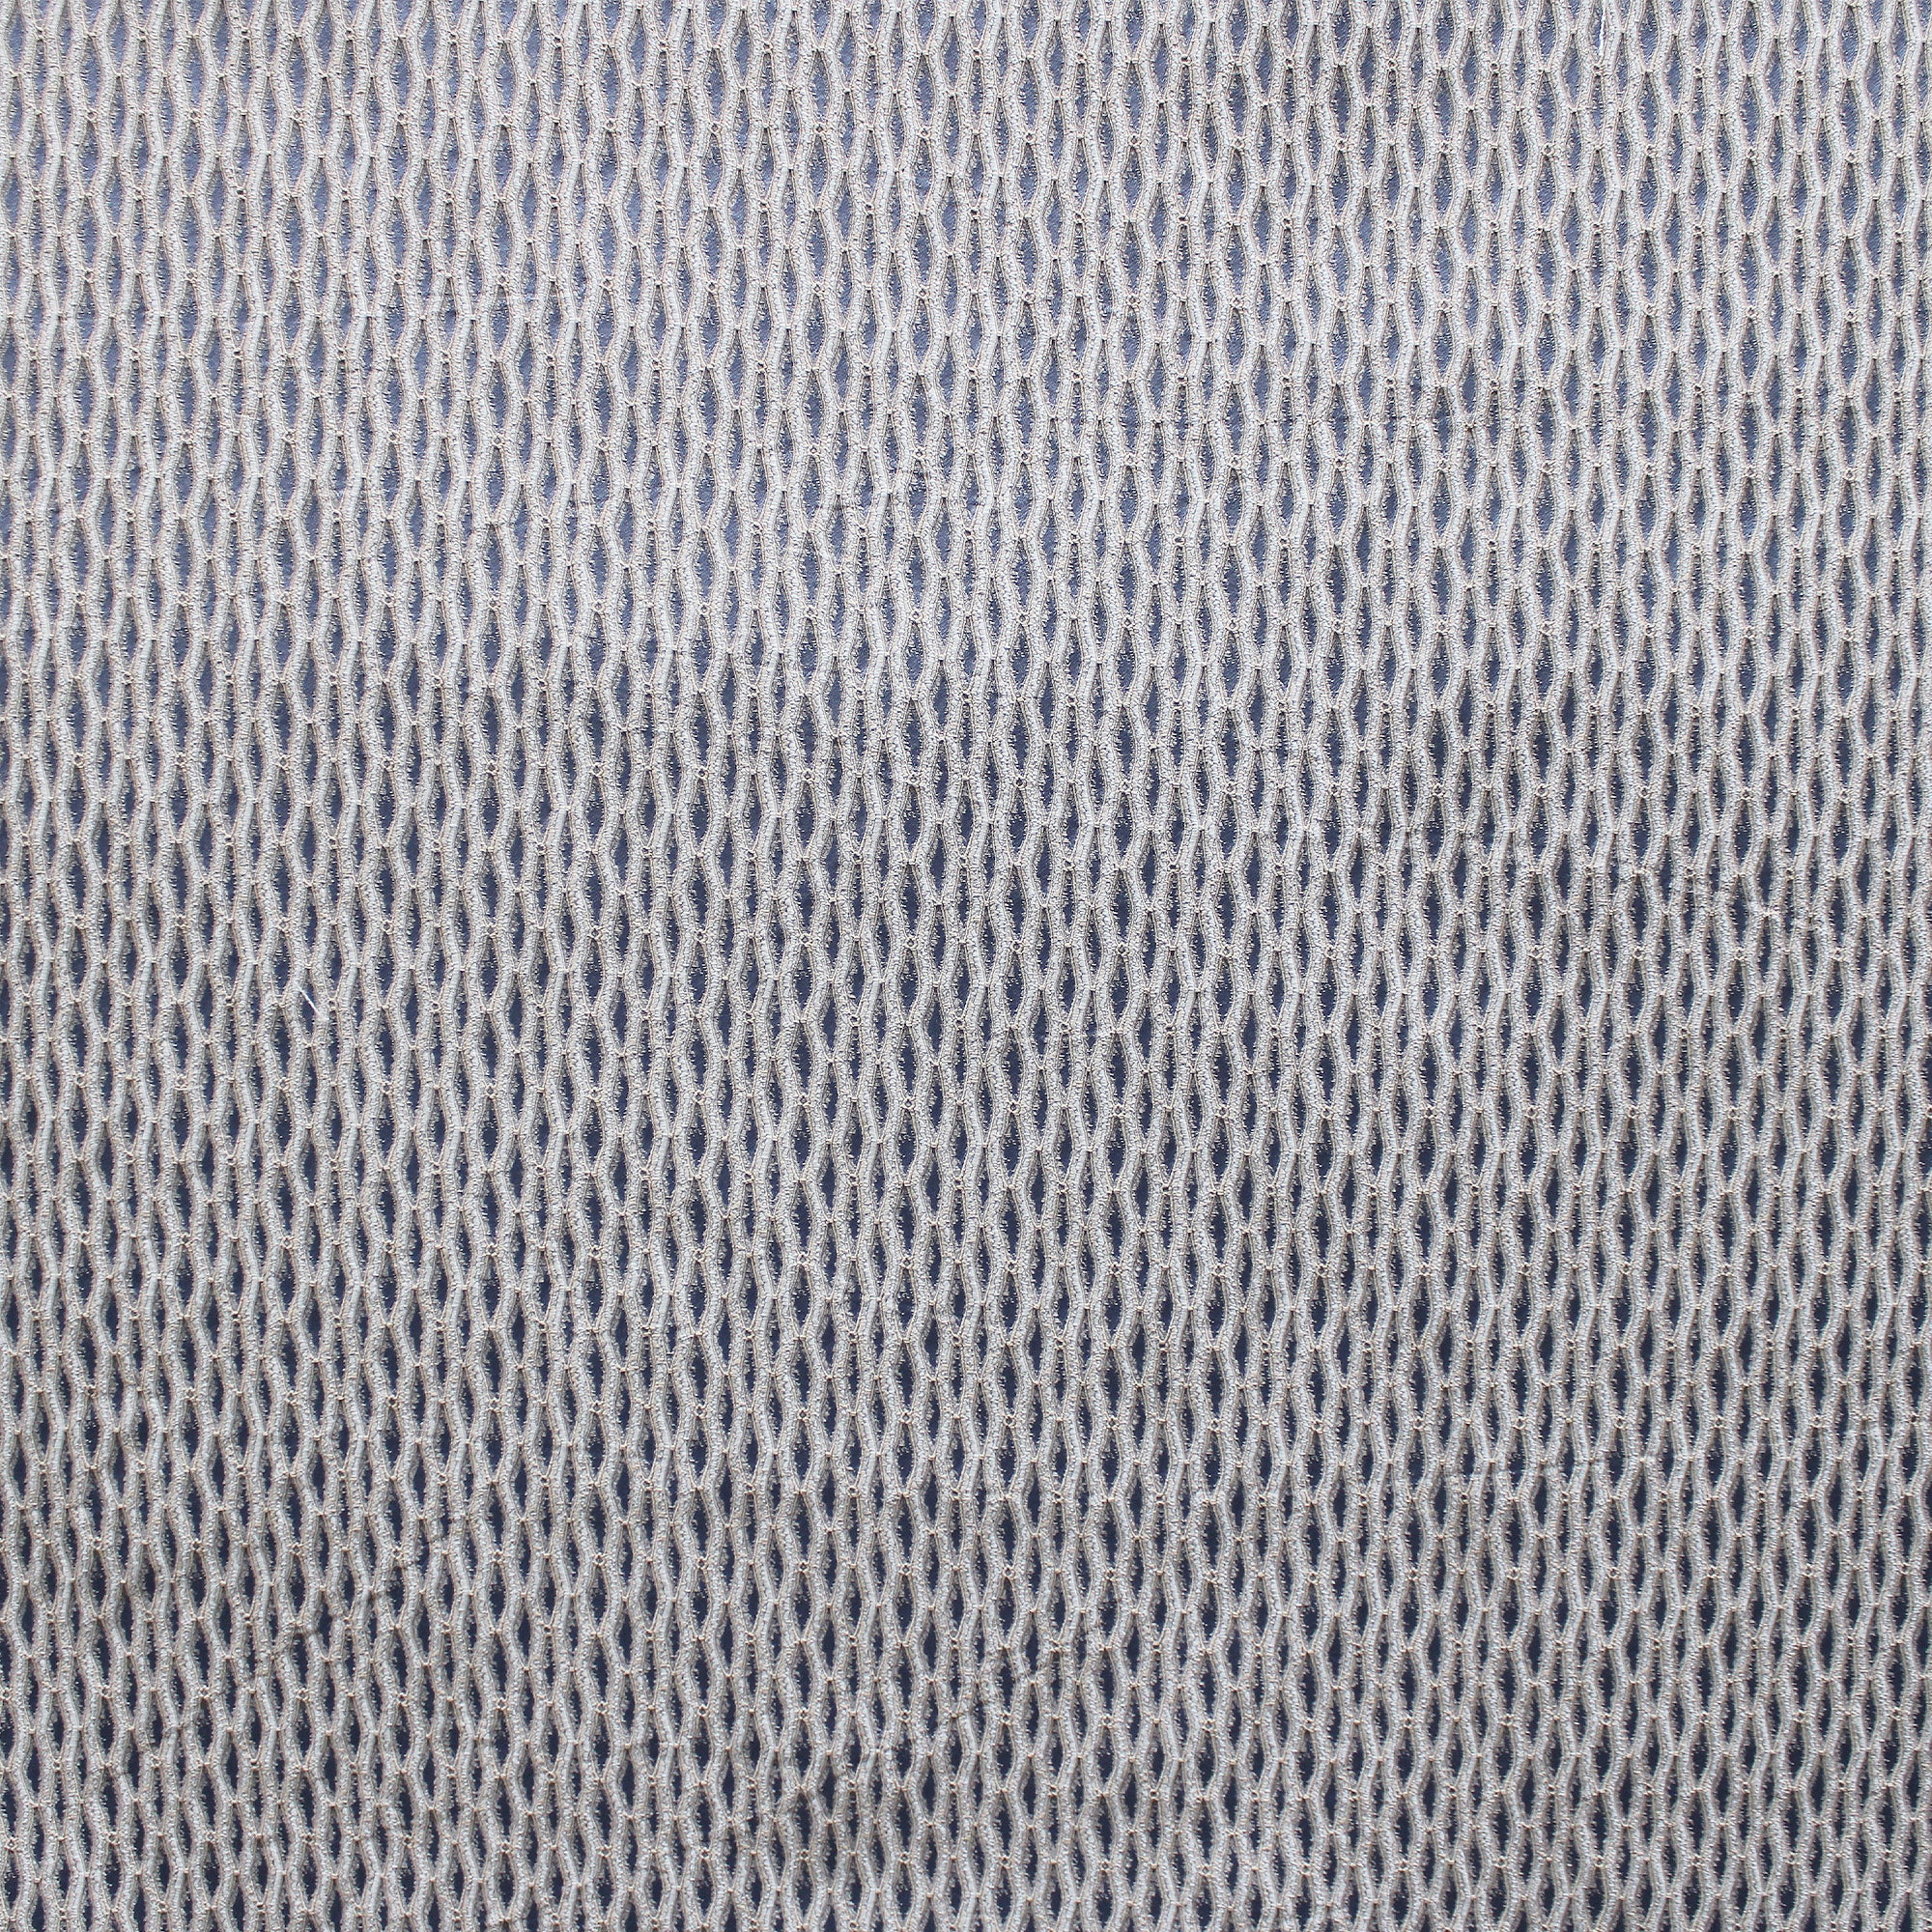 Peyton Fabric | Wavy Textured Jacquard